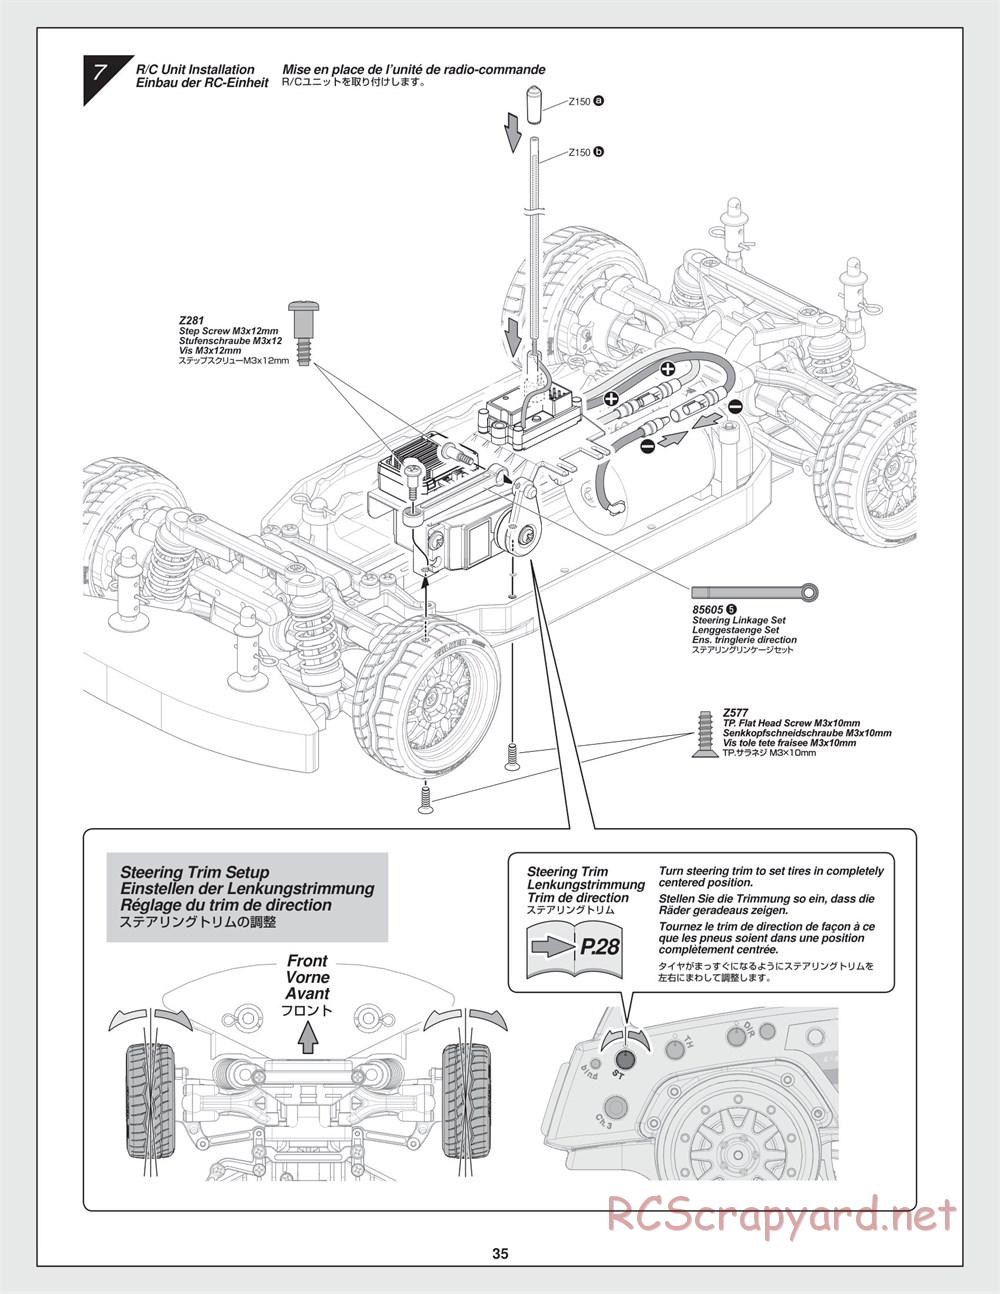 HPI - E10 Drift - Manual - Page 35